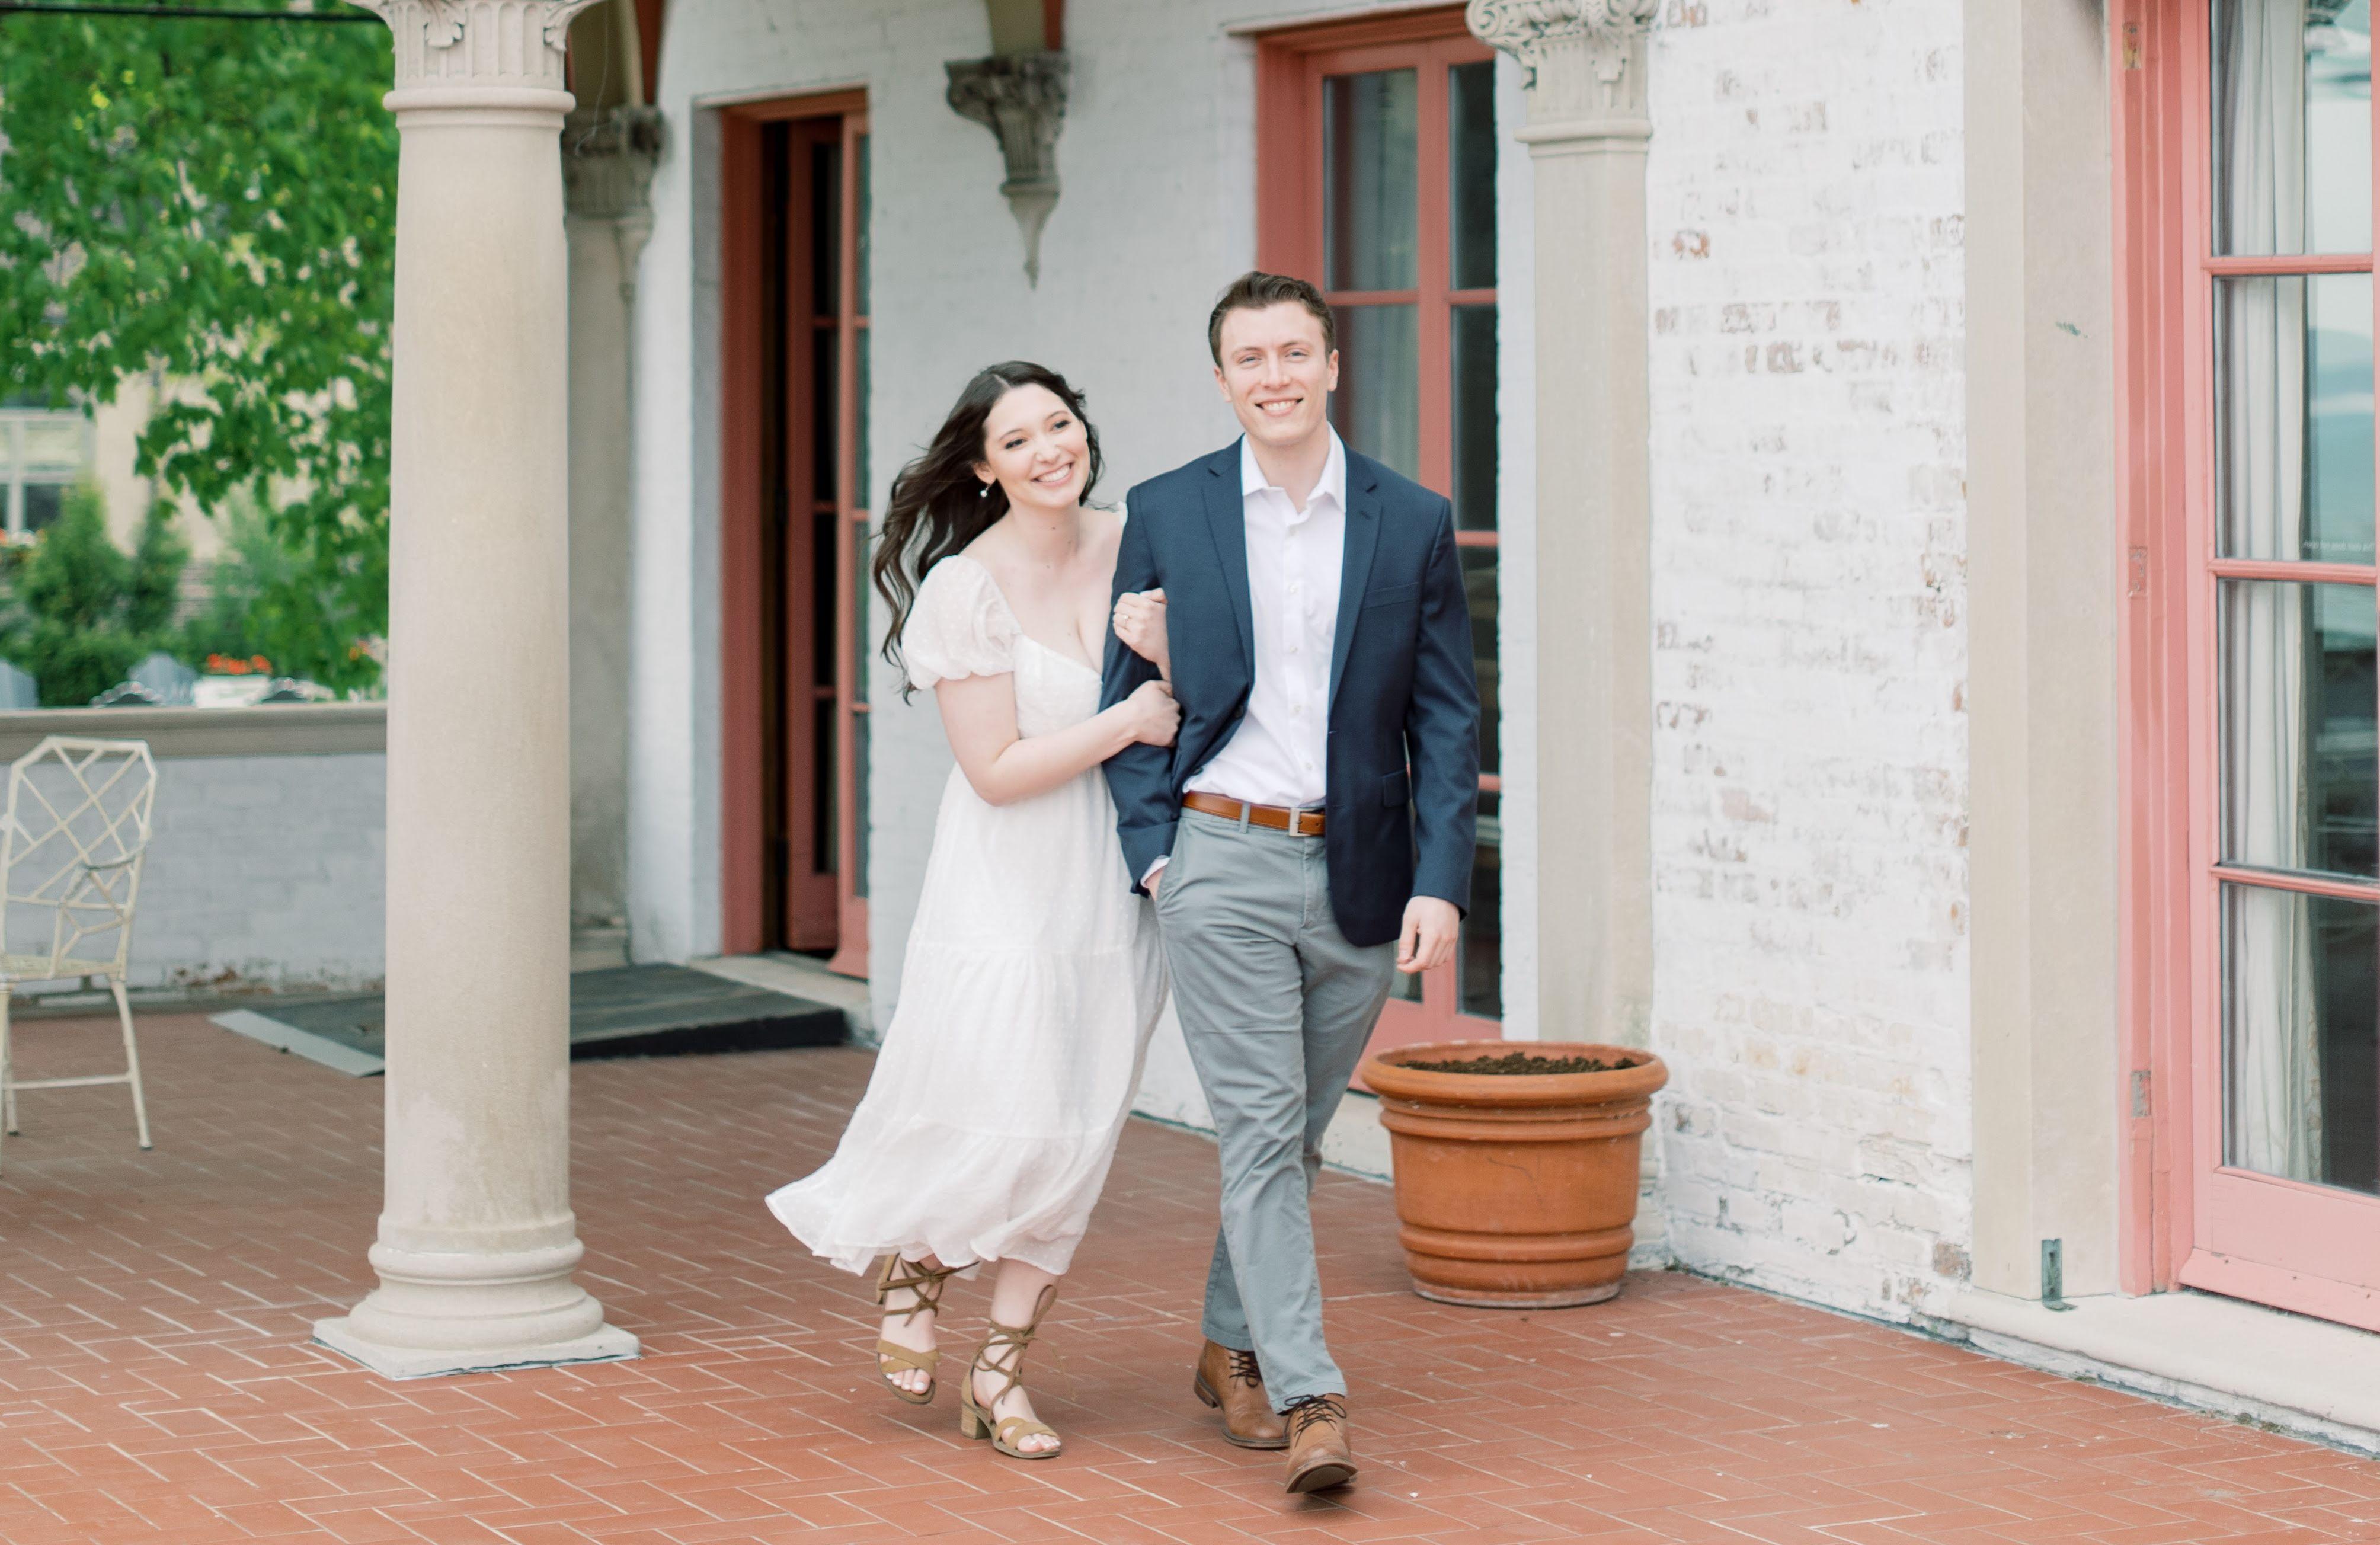 The Wedding Website of Rebecca Chavin and Jake Schaum